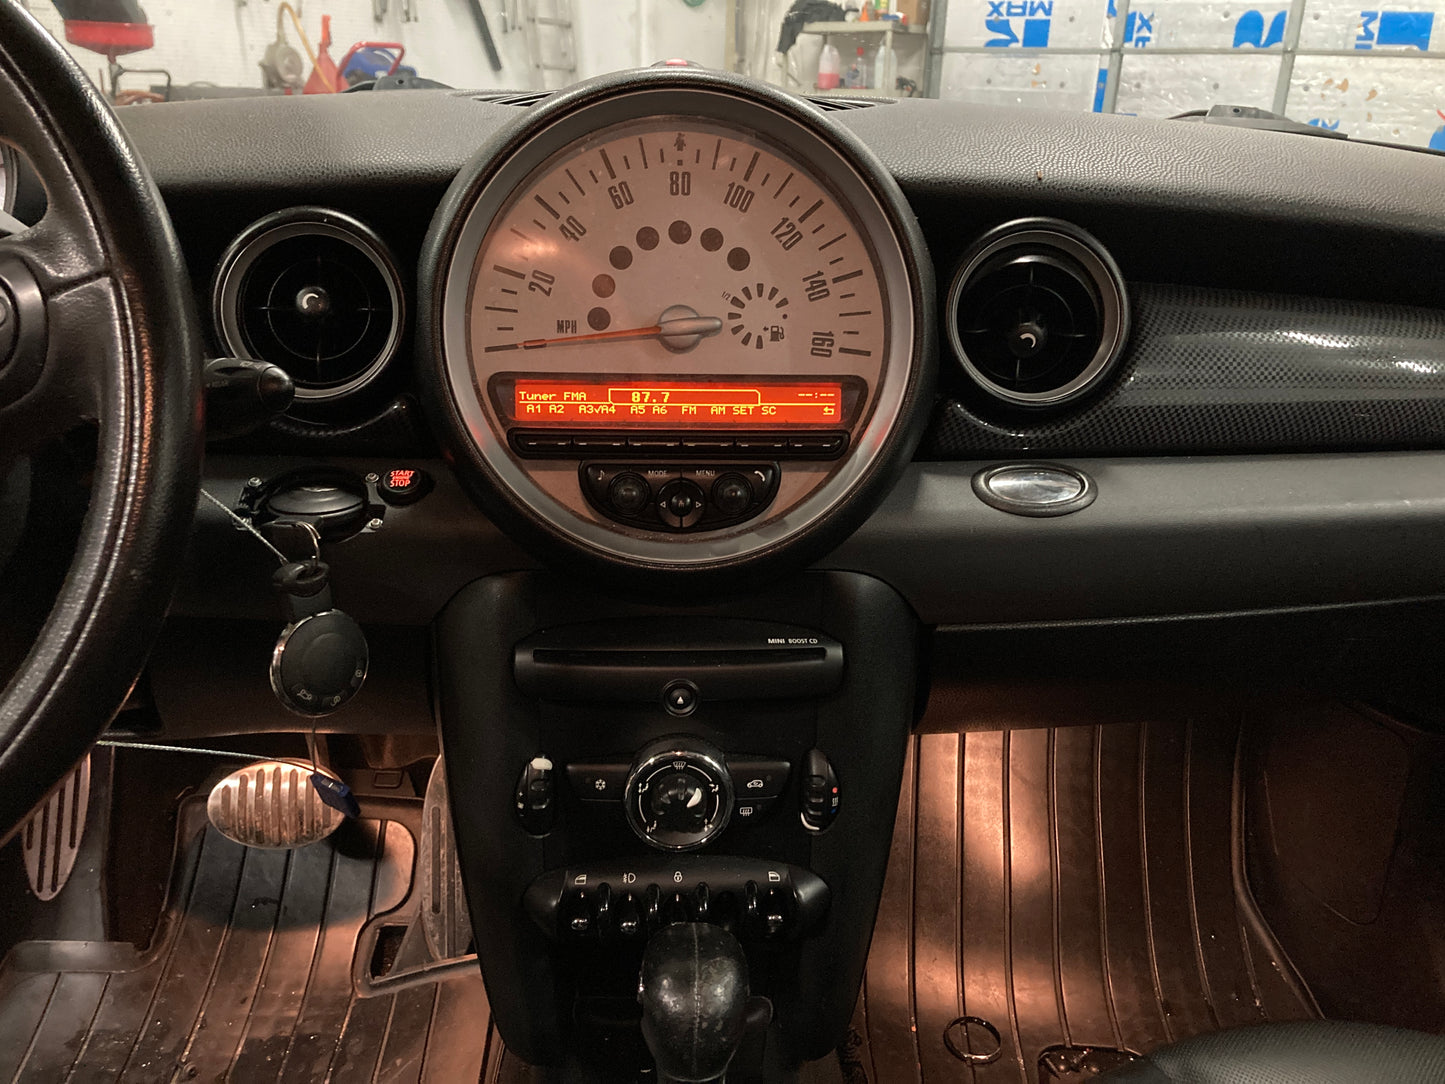 2011 MINI Cooper S, New Parts Car (March 2023) Stk #365